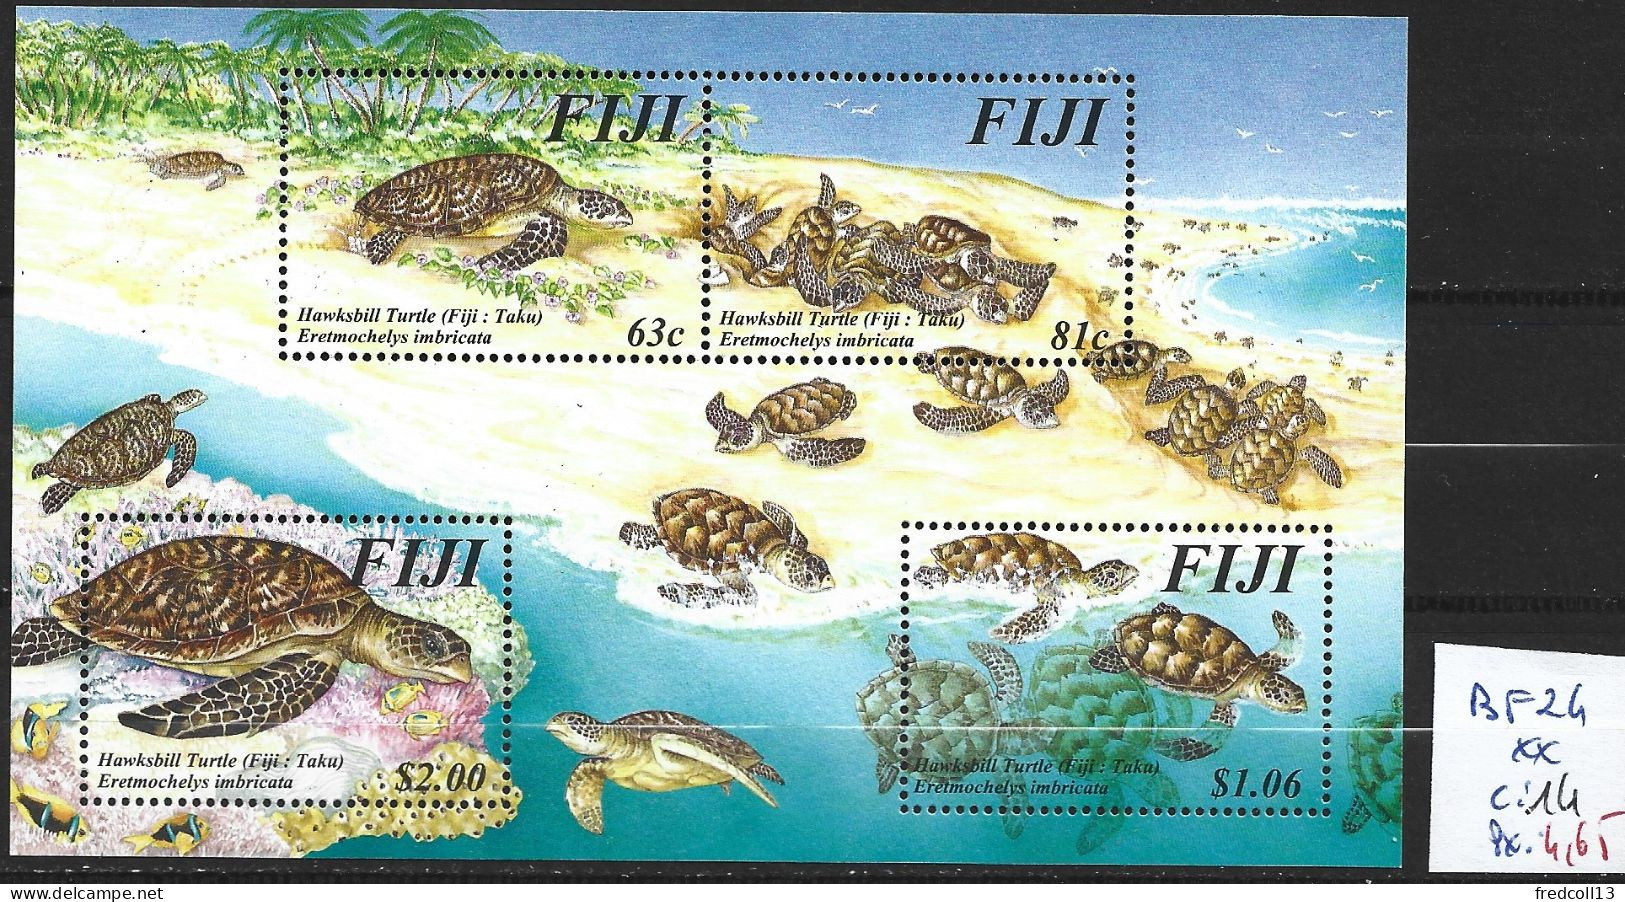 FIDJI BF 24 ** Côte 14 € - Fidji (1970-...)